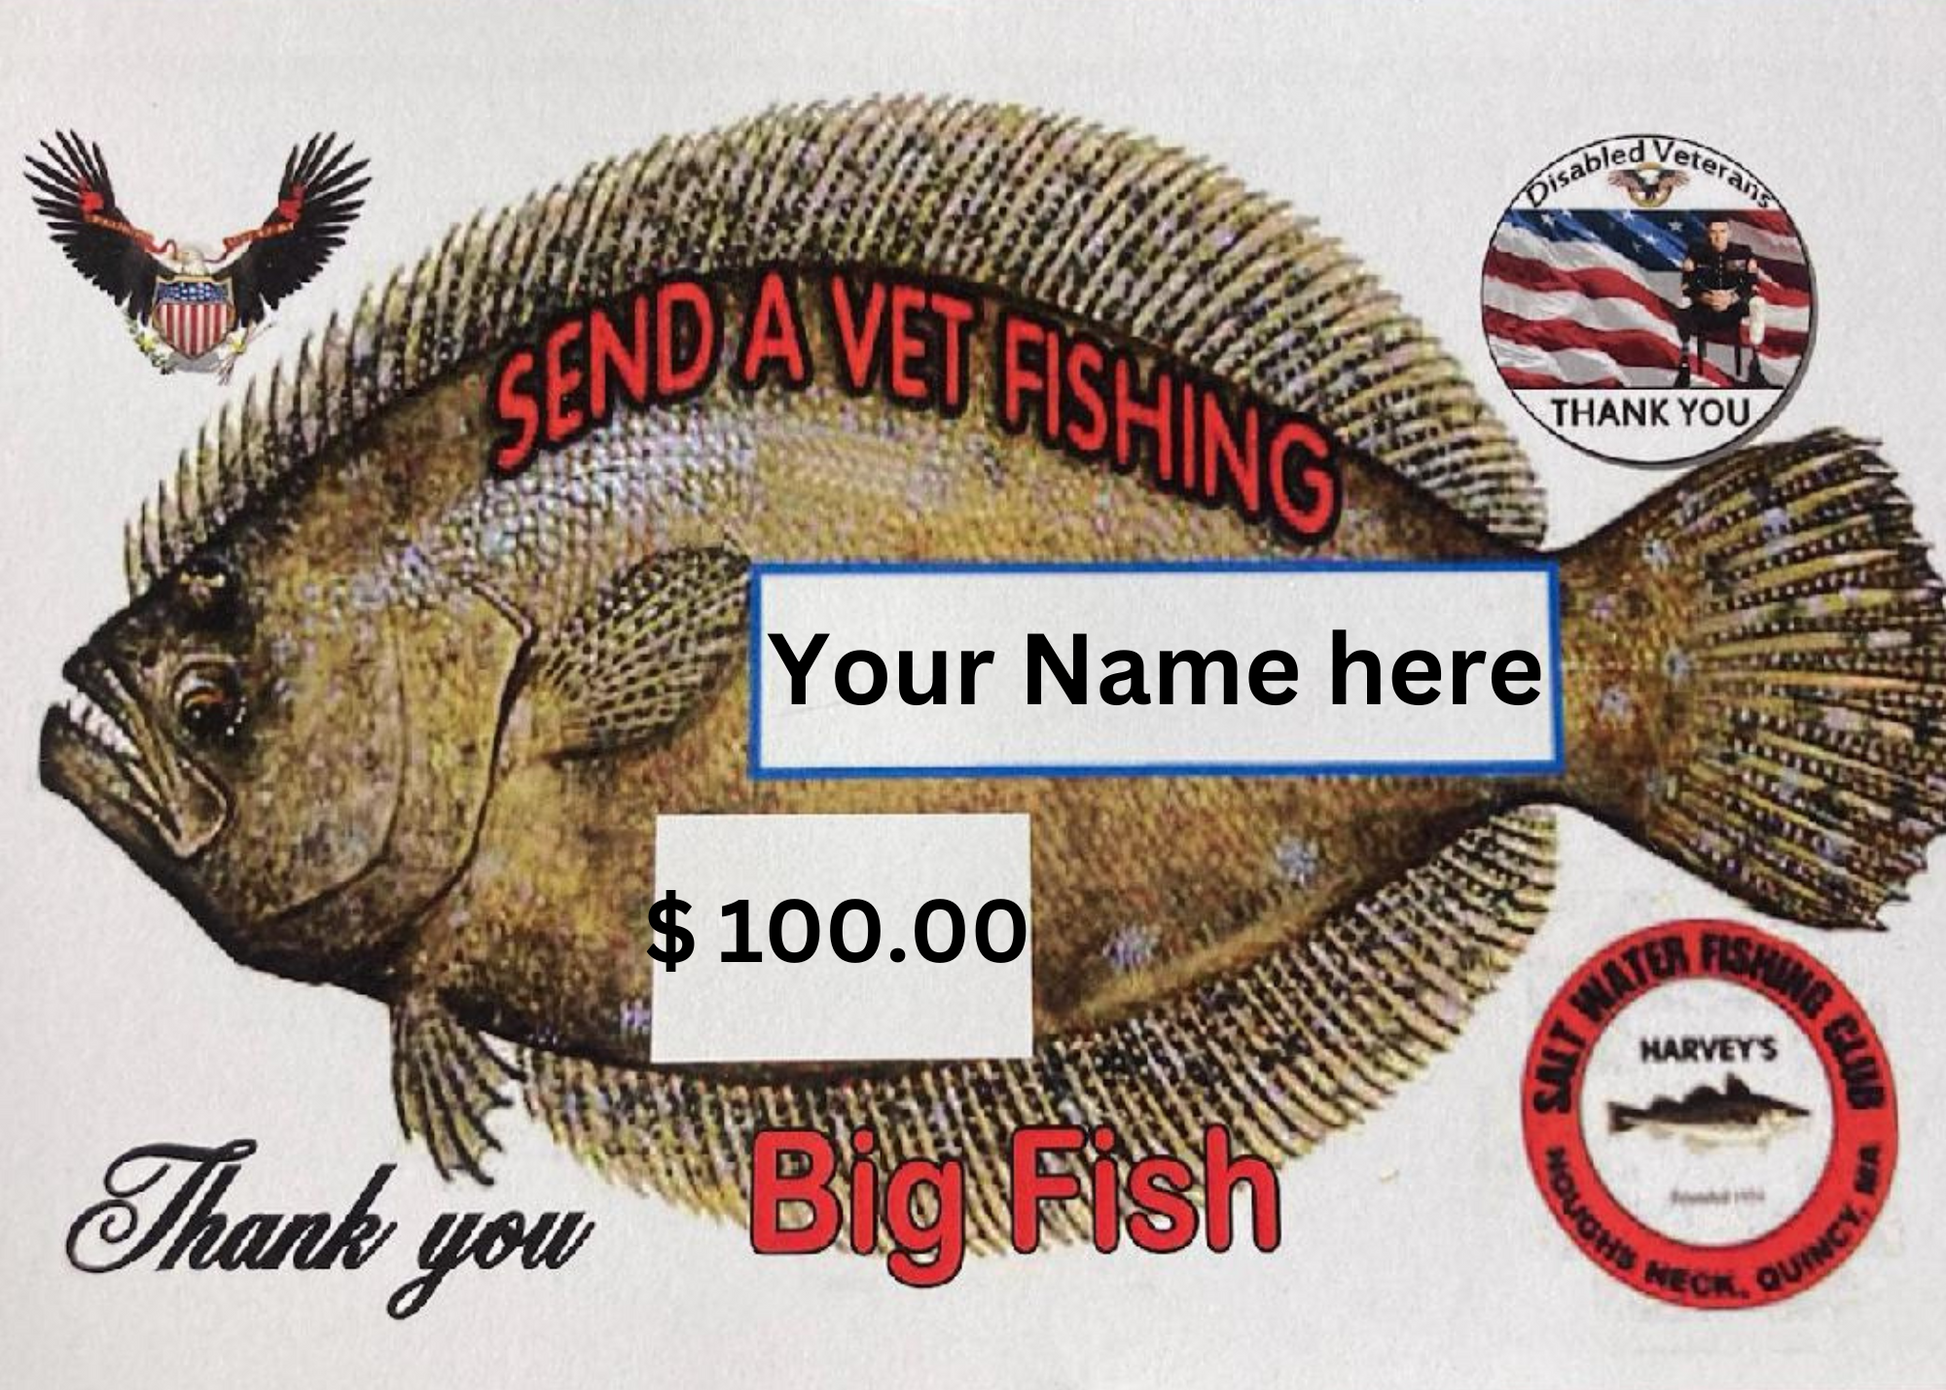 100.00 Donation Card – Harvey's Saltwater Fishing Club